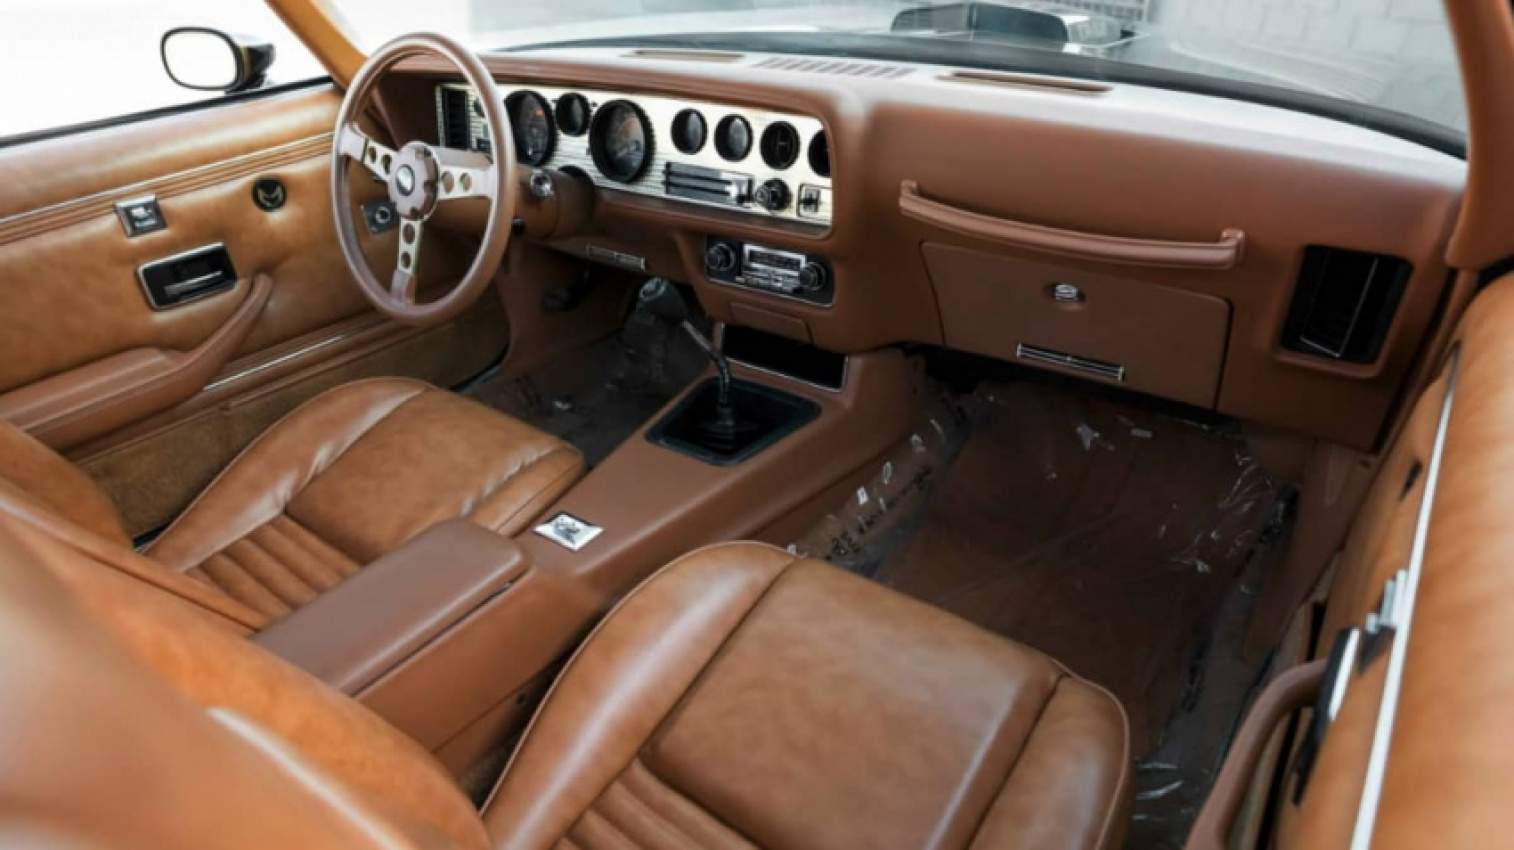 autos, cars, pontiac, 1977 pontiac trans am for sale in ‘as new’ condition